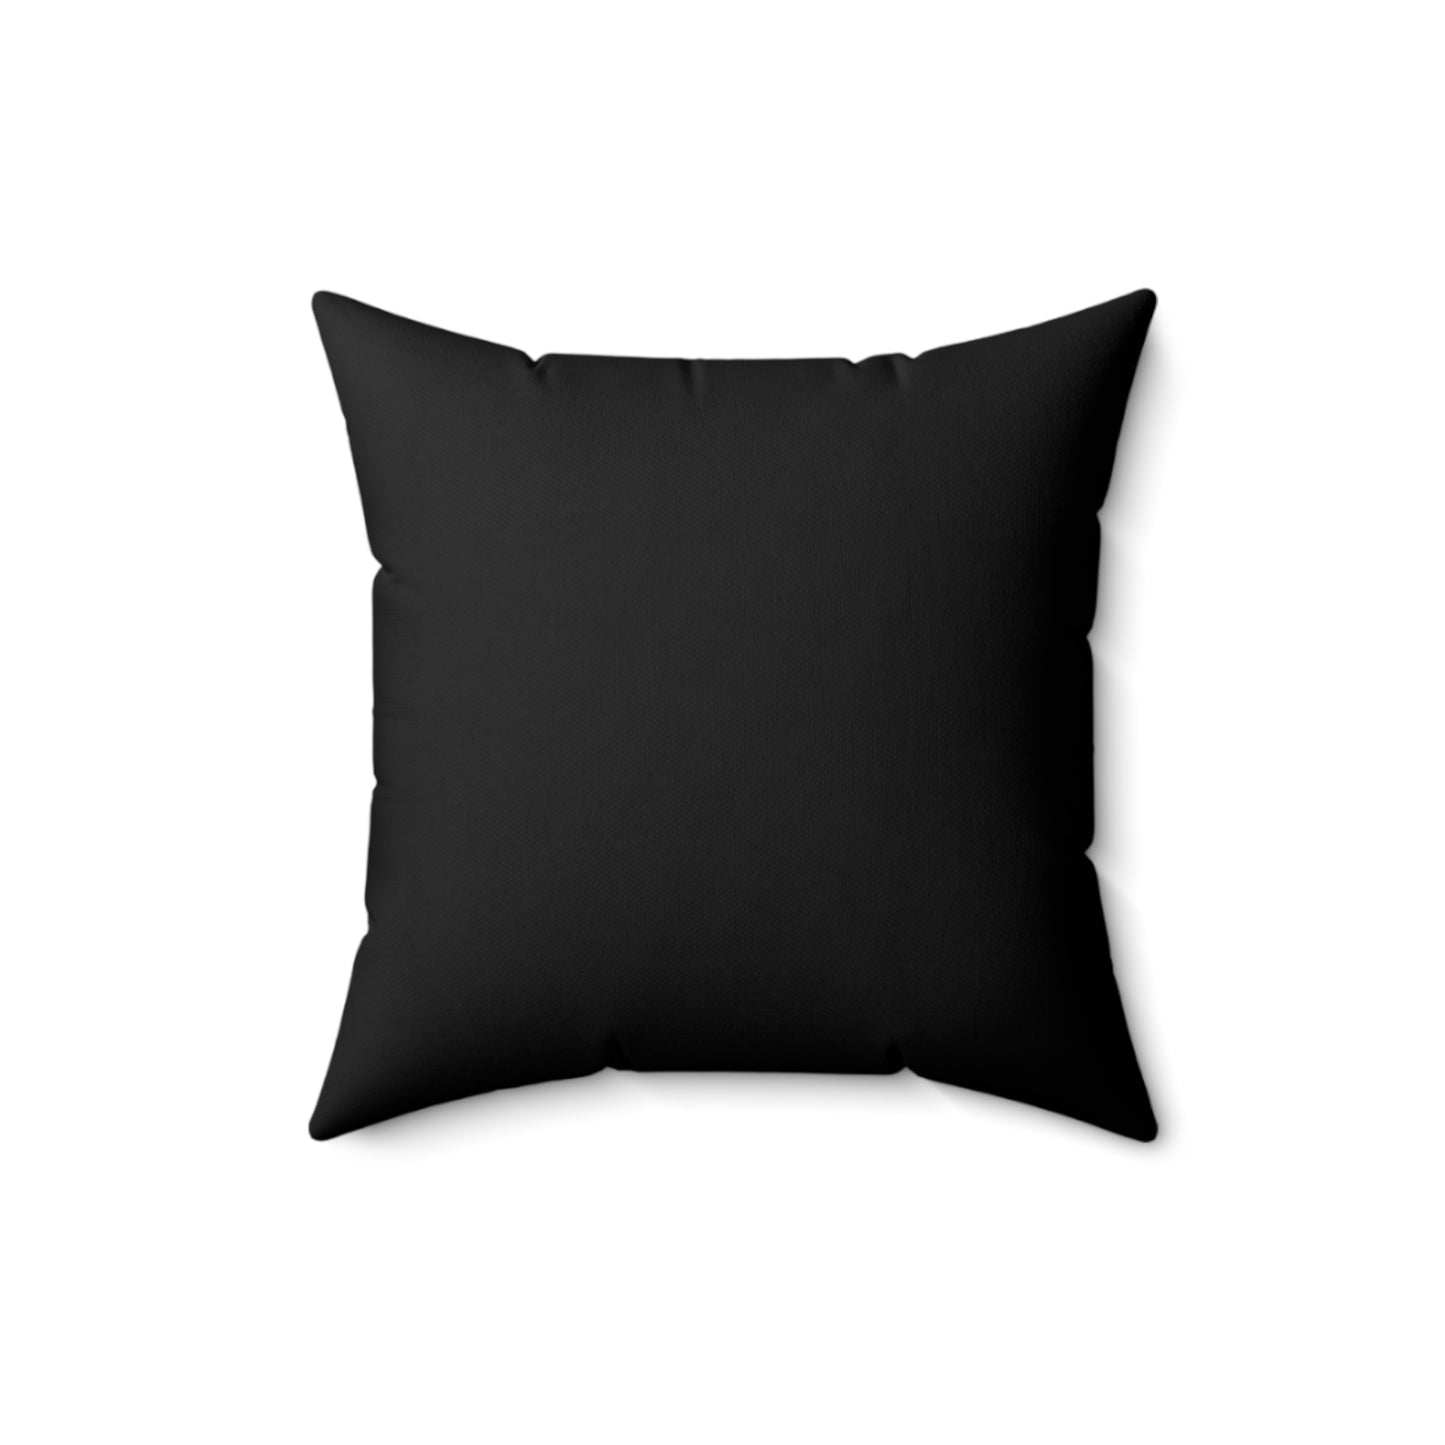 Circle Design White And Black Spun Polyester Square Pillow